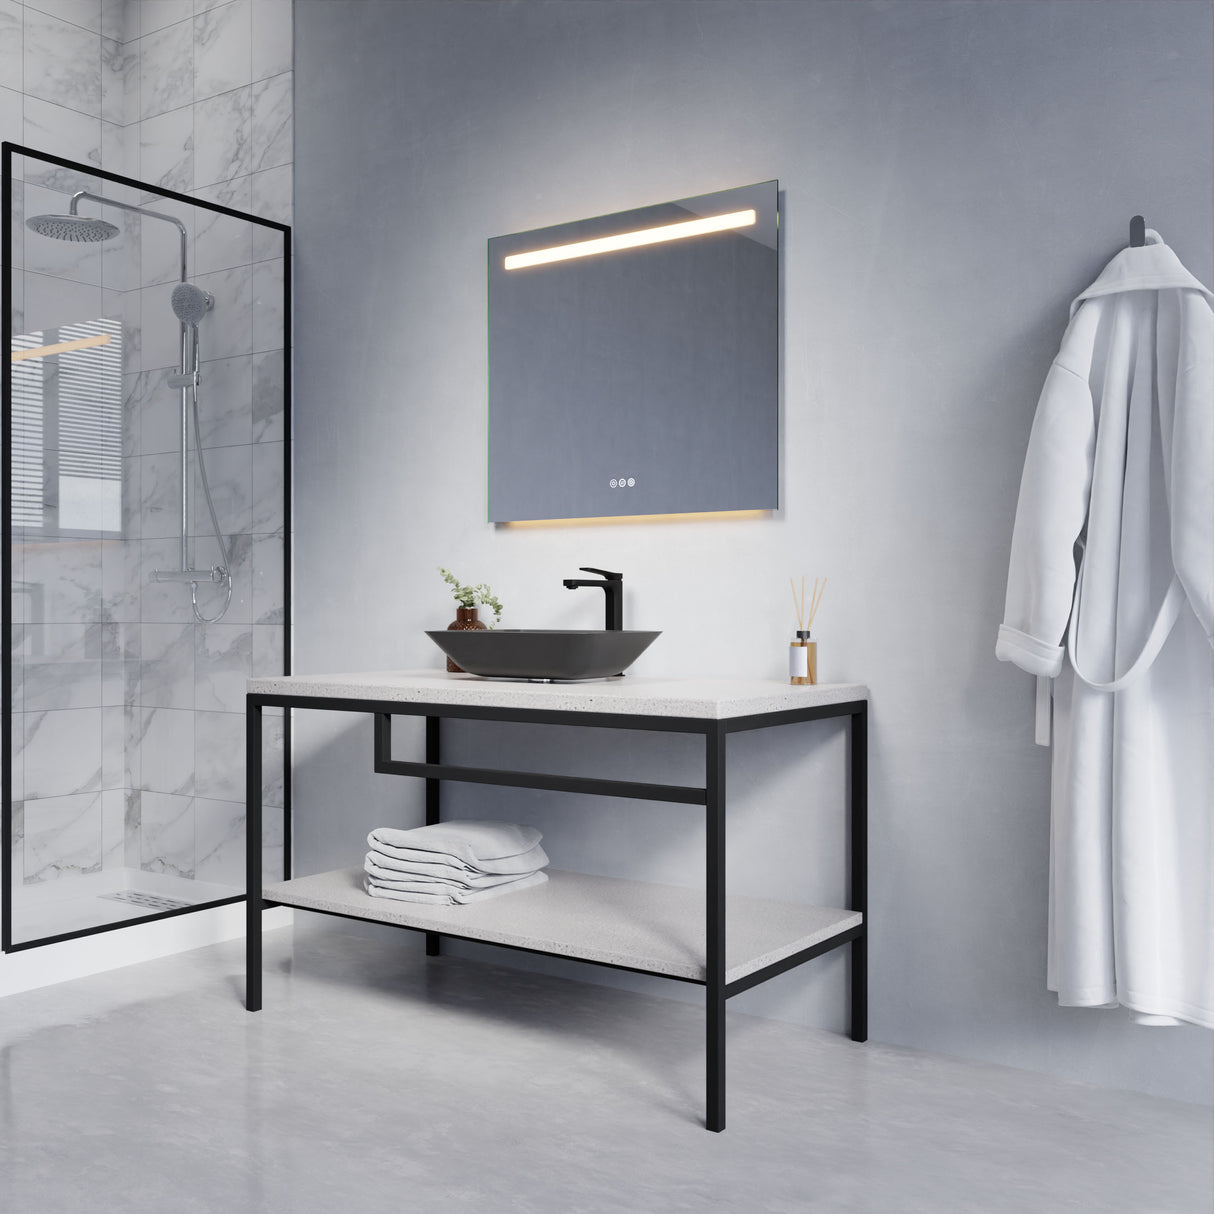 ANZZI BA-LMDFX011AL 28-in. x 32-in. LED Front/Top/Bottom Light Bathroom Mirror with Defogger